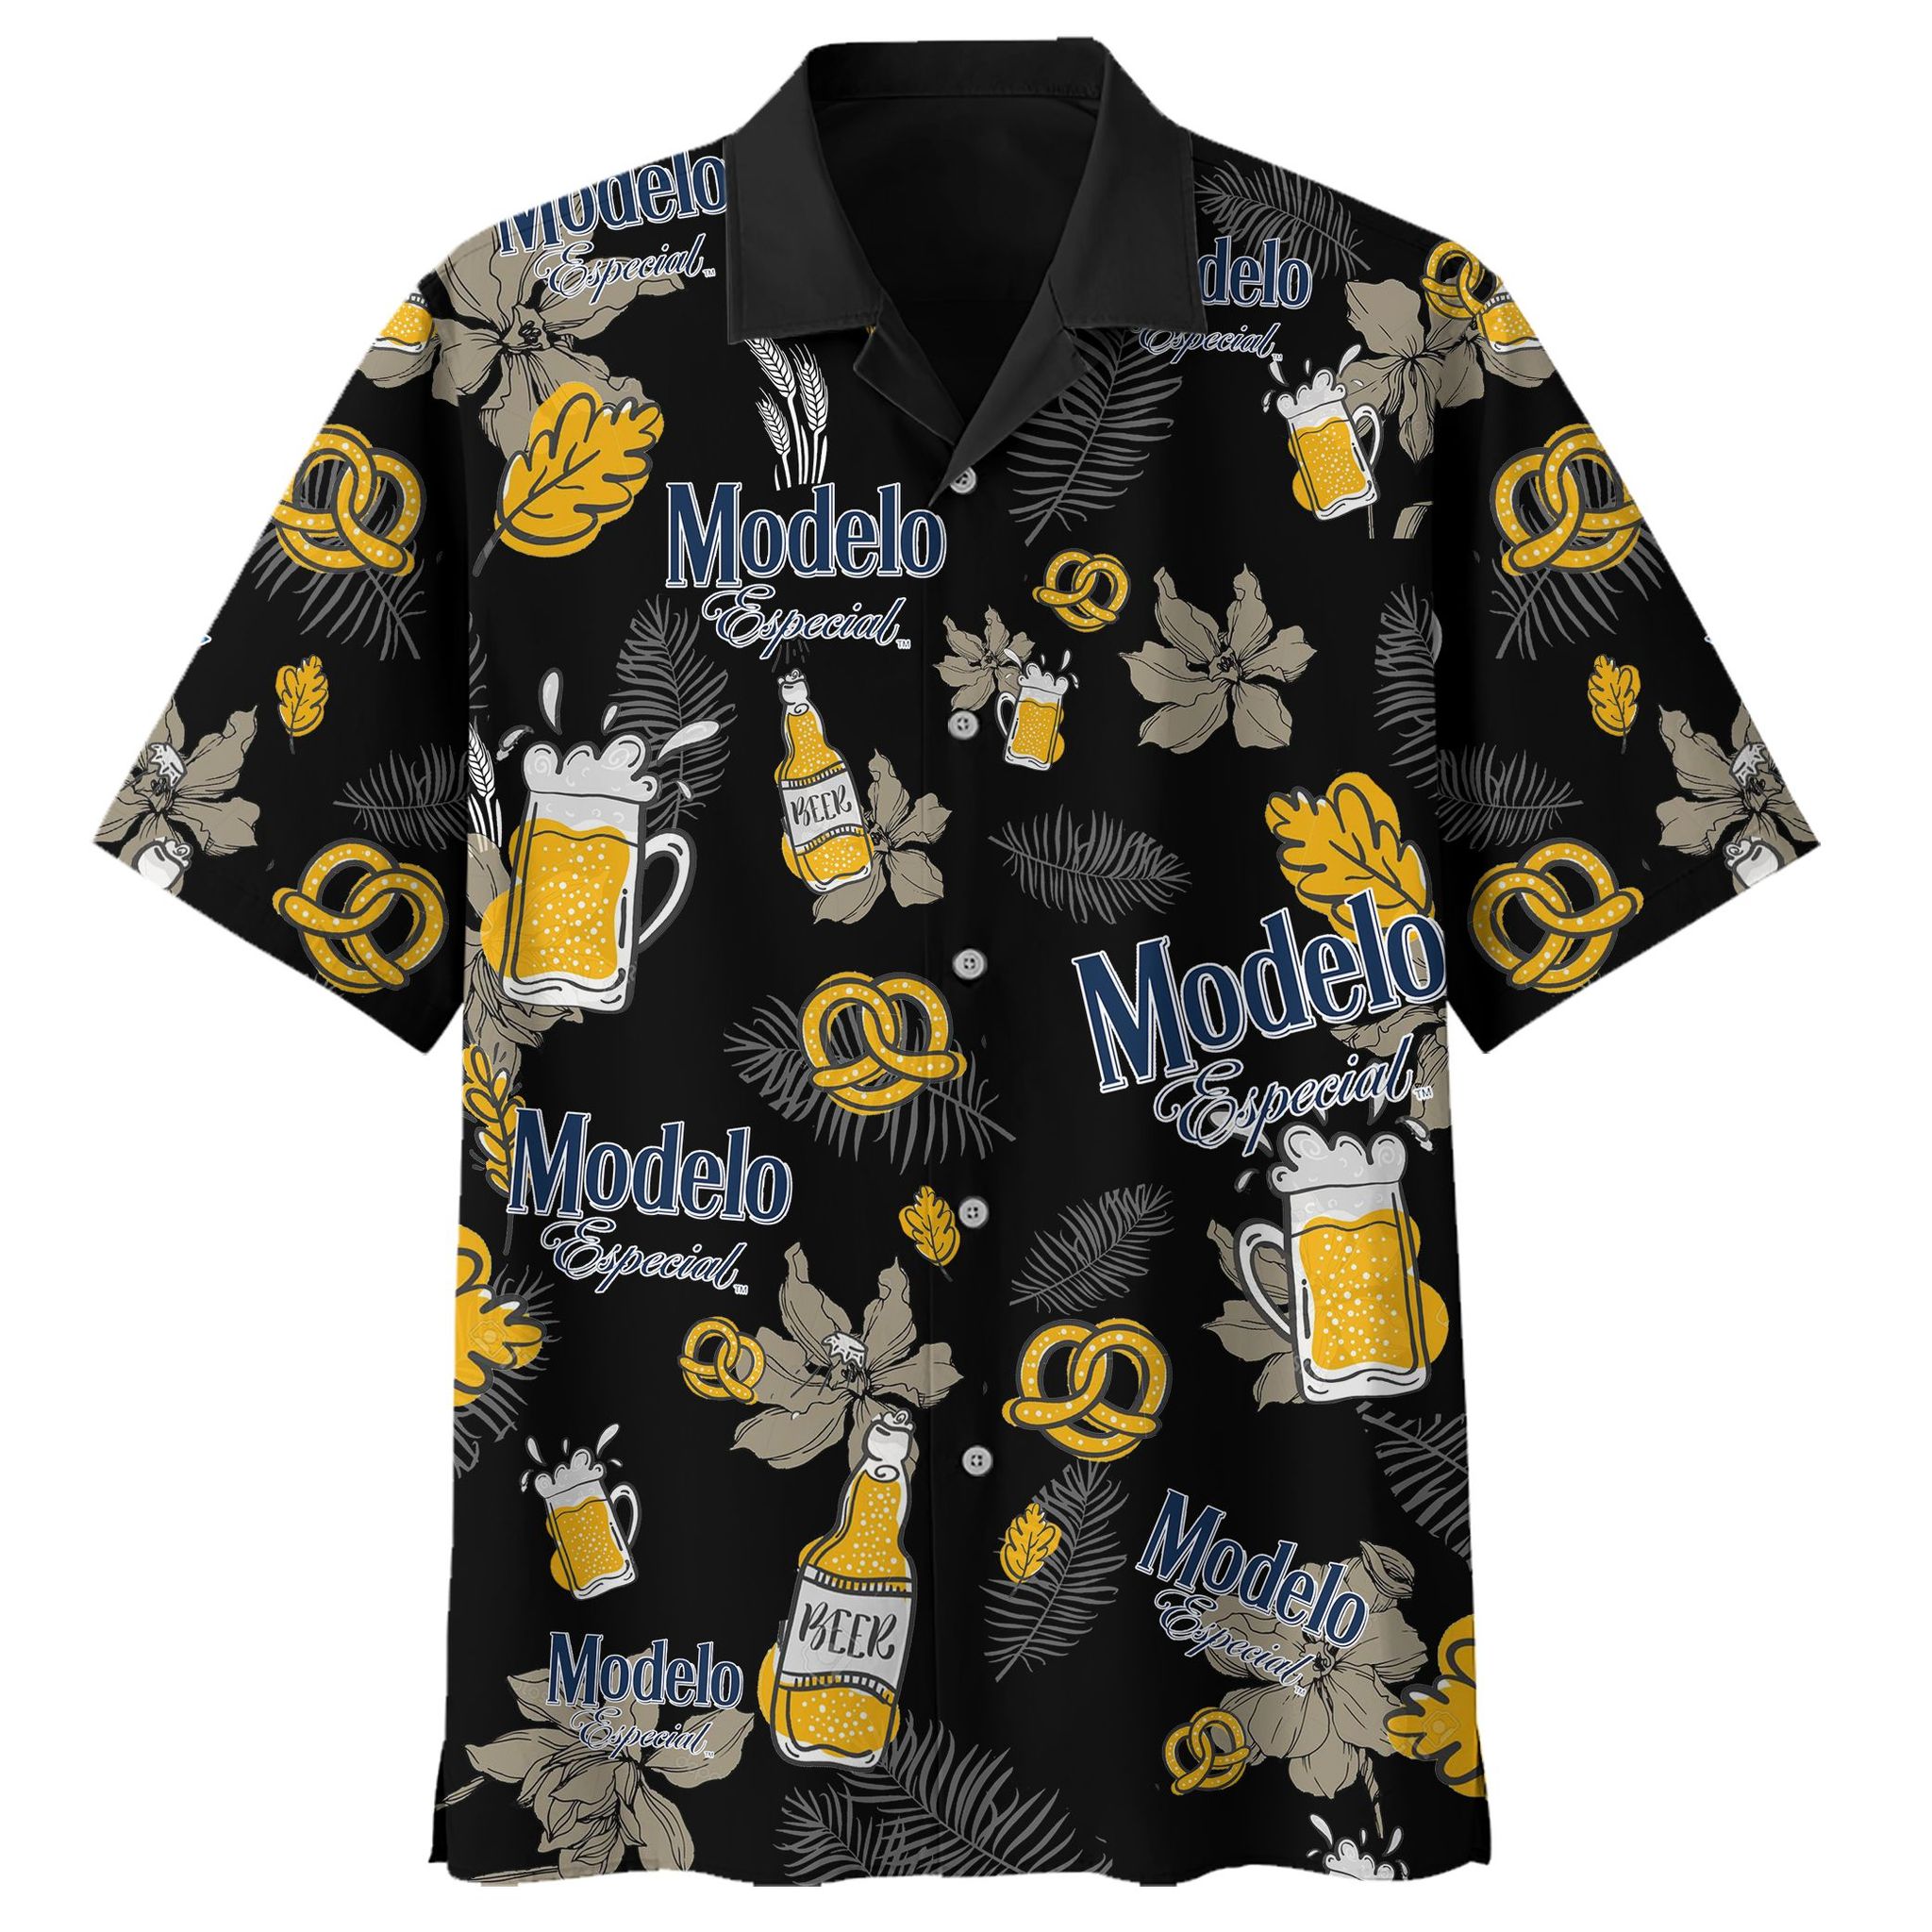 Modelo Especial Beer hawaiian shirt - Picture 1